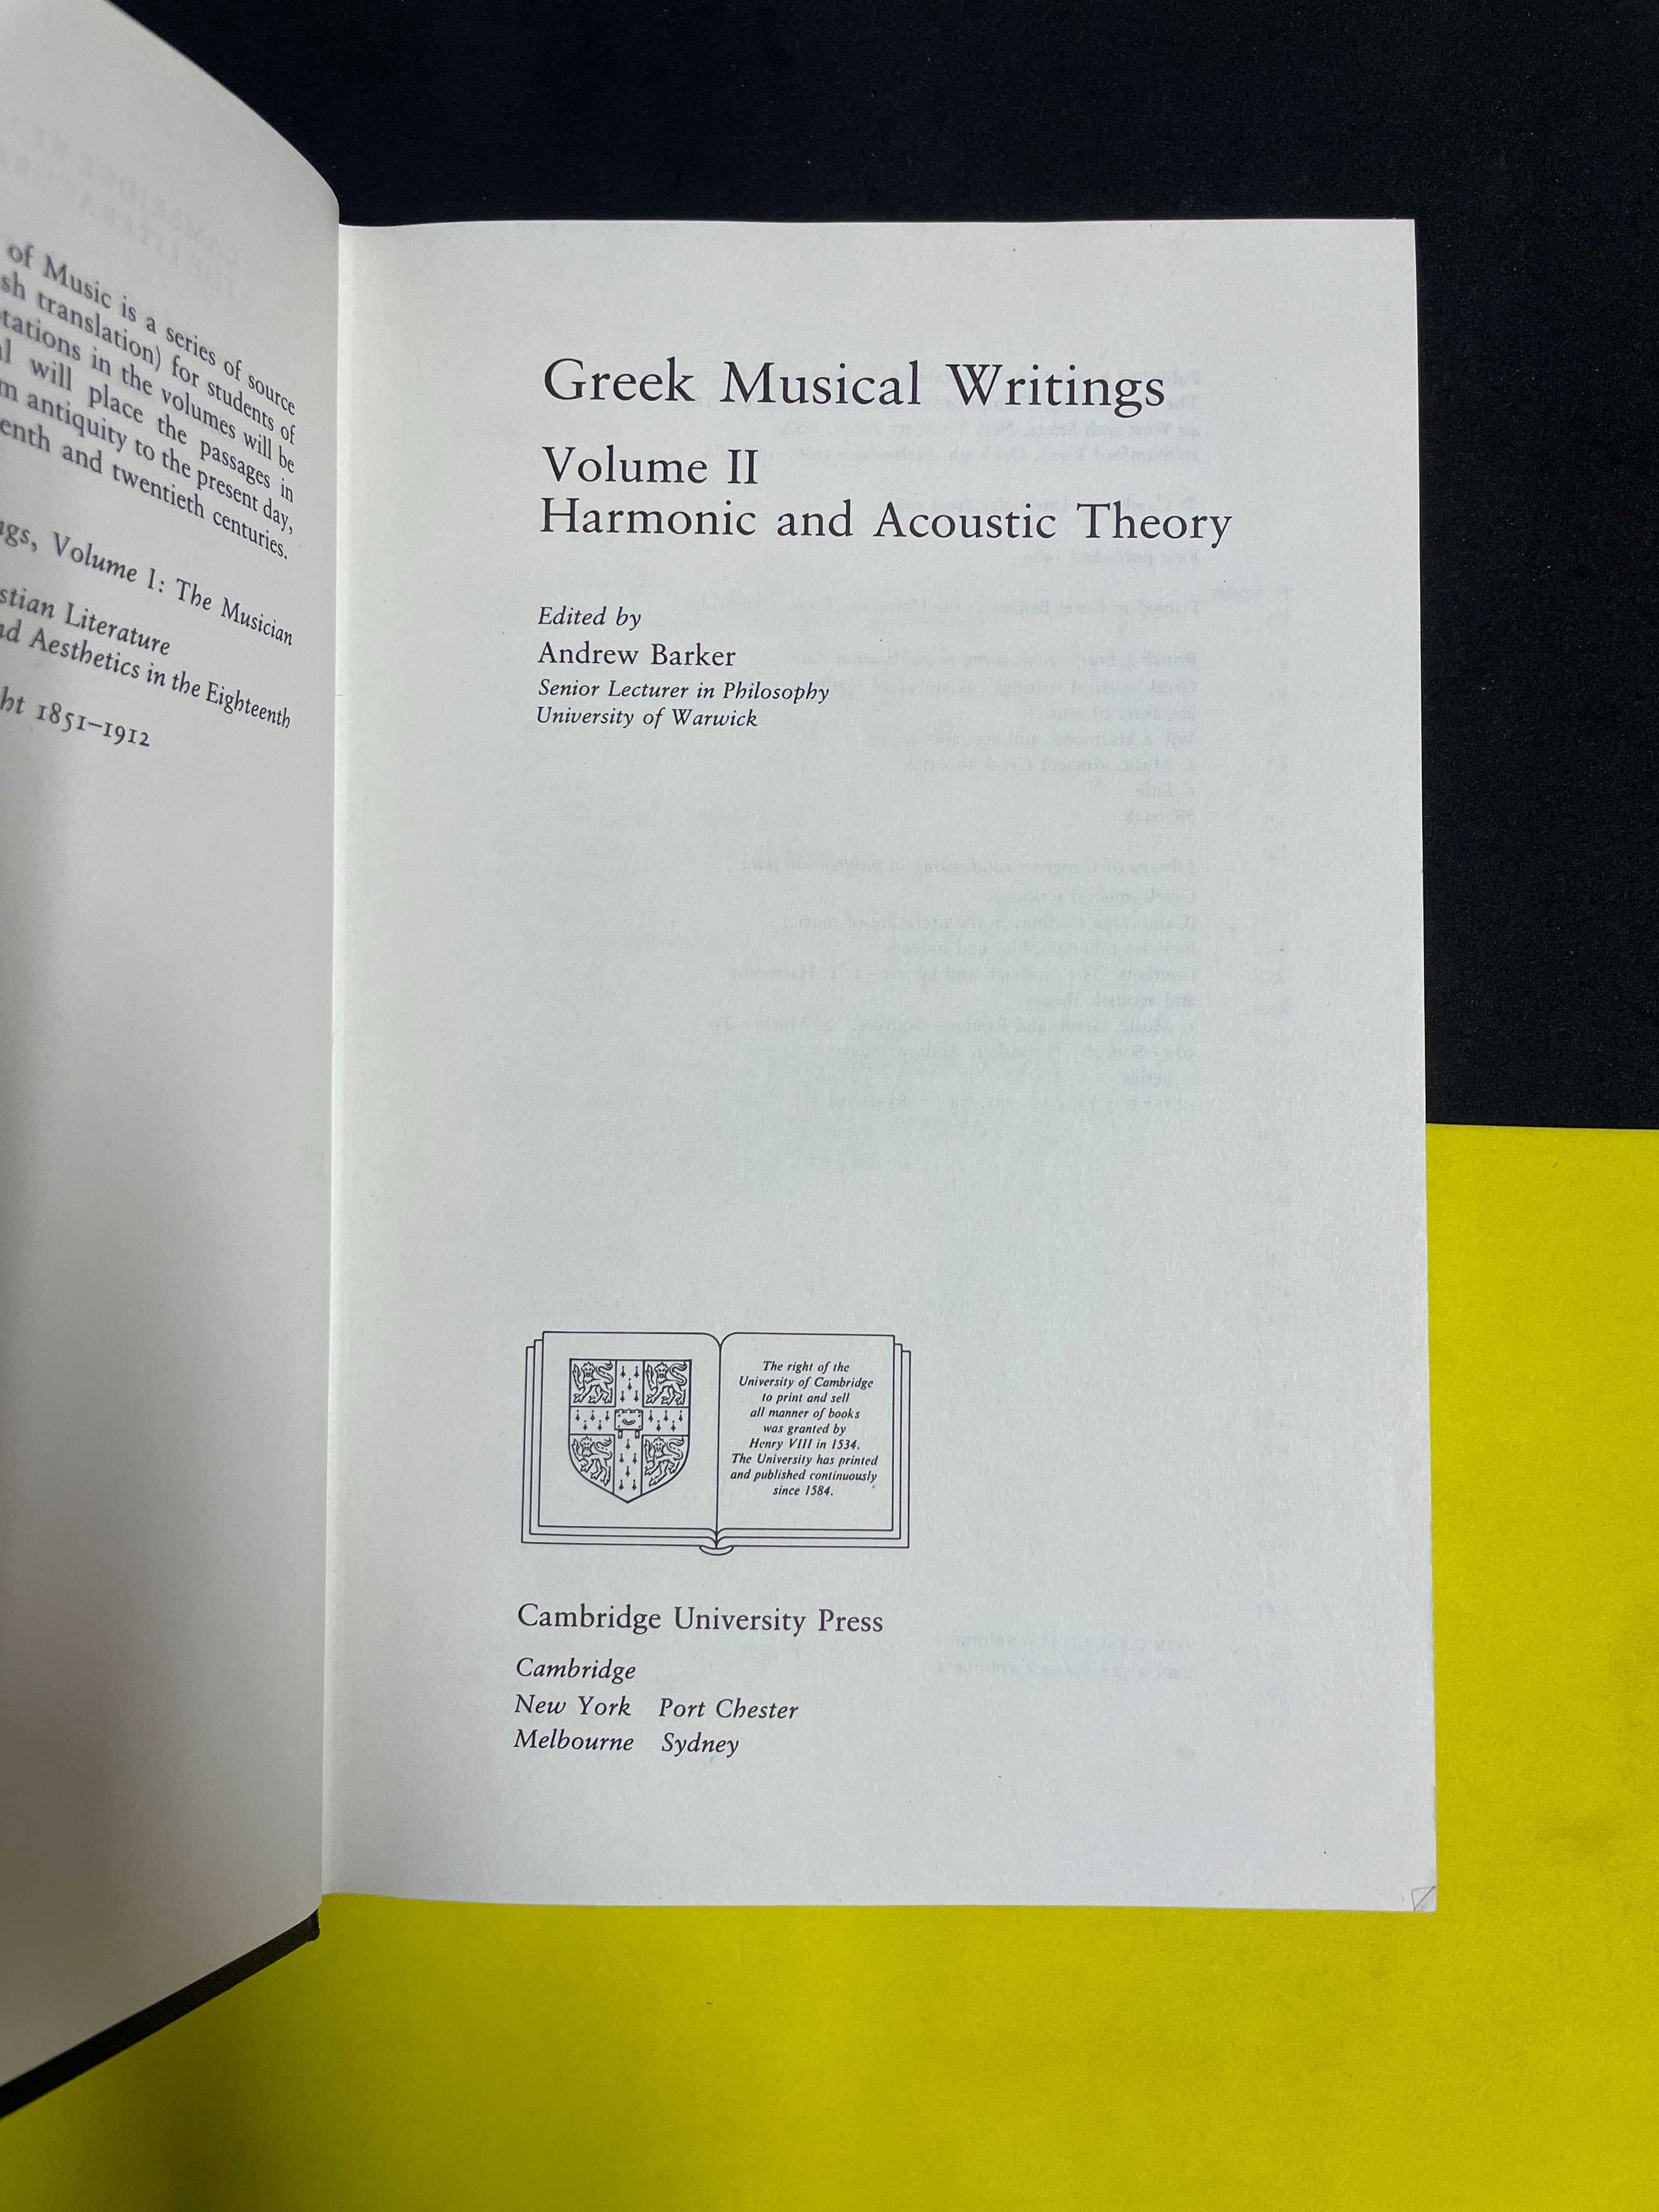 Andrew Barker - Greek Musical Writings volume II